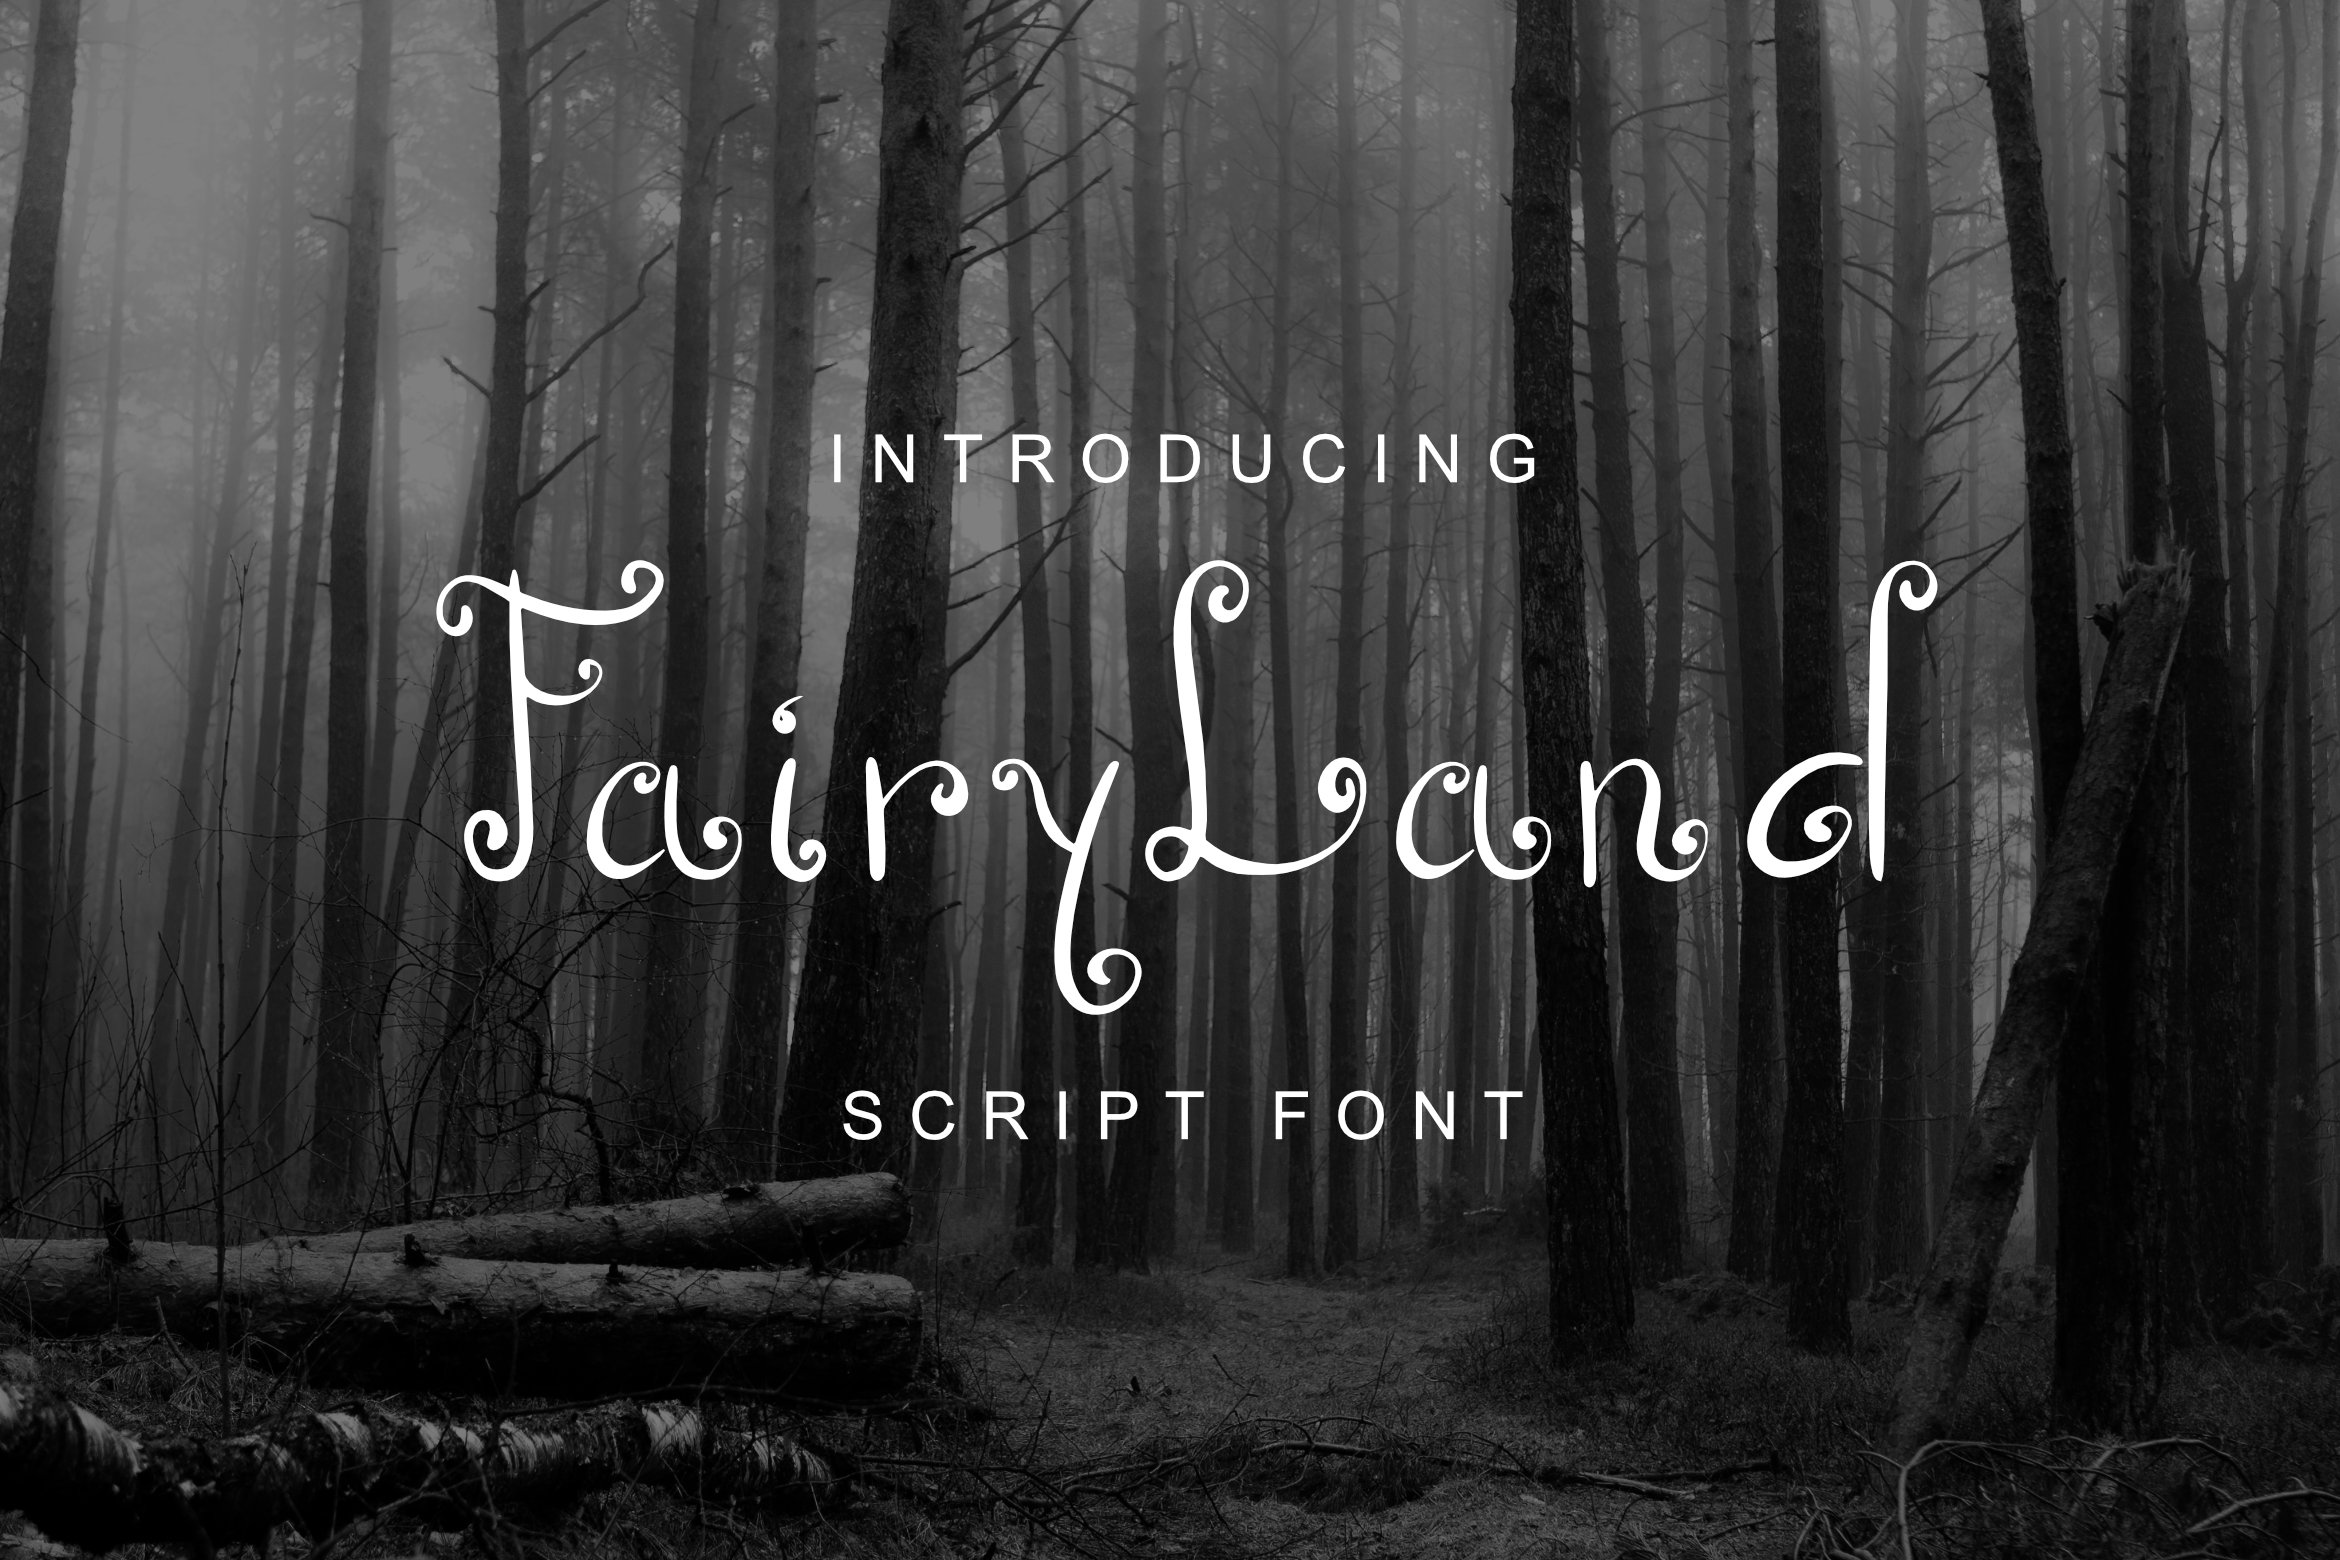 FairyLand - Script Font cover image.